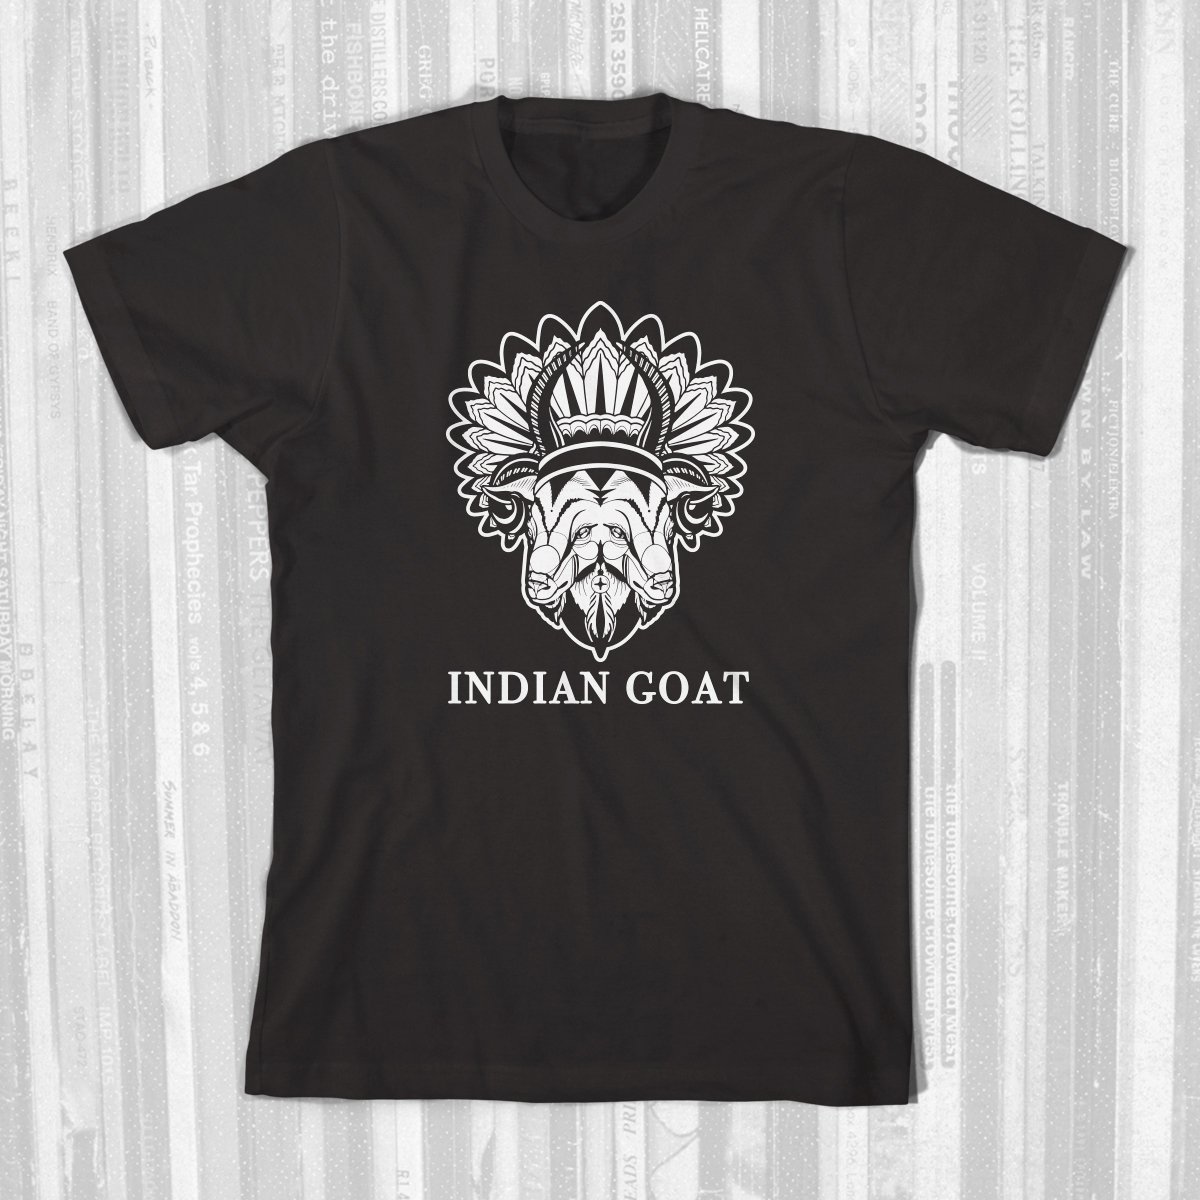 Indian Goat - Logo tee